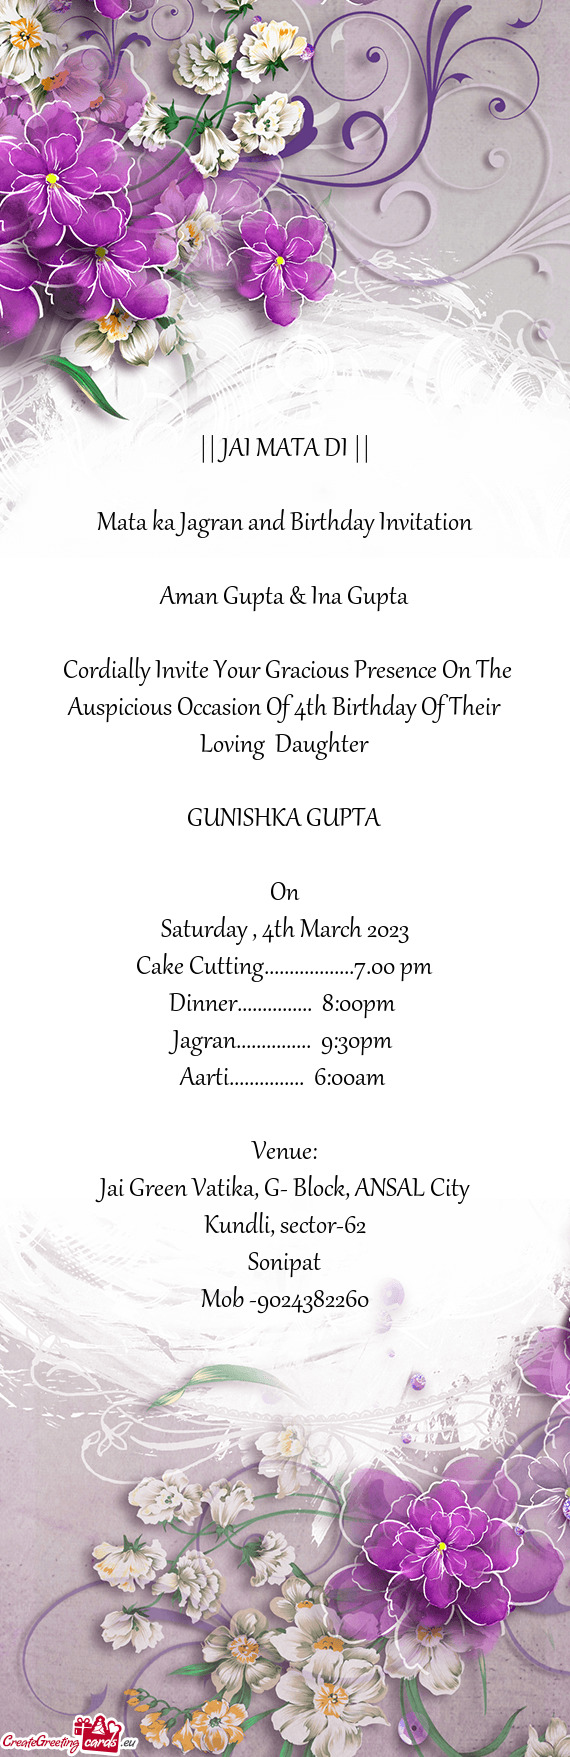 Mata ka Jagran and Birthday Invitation